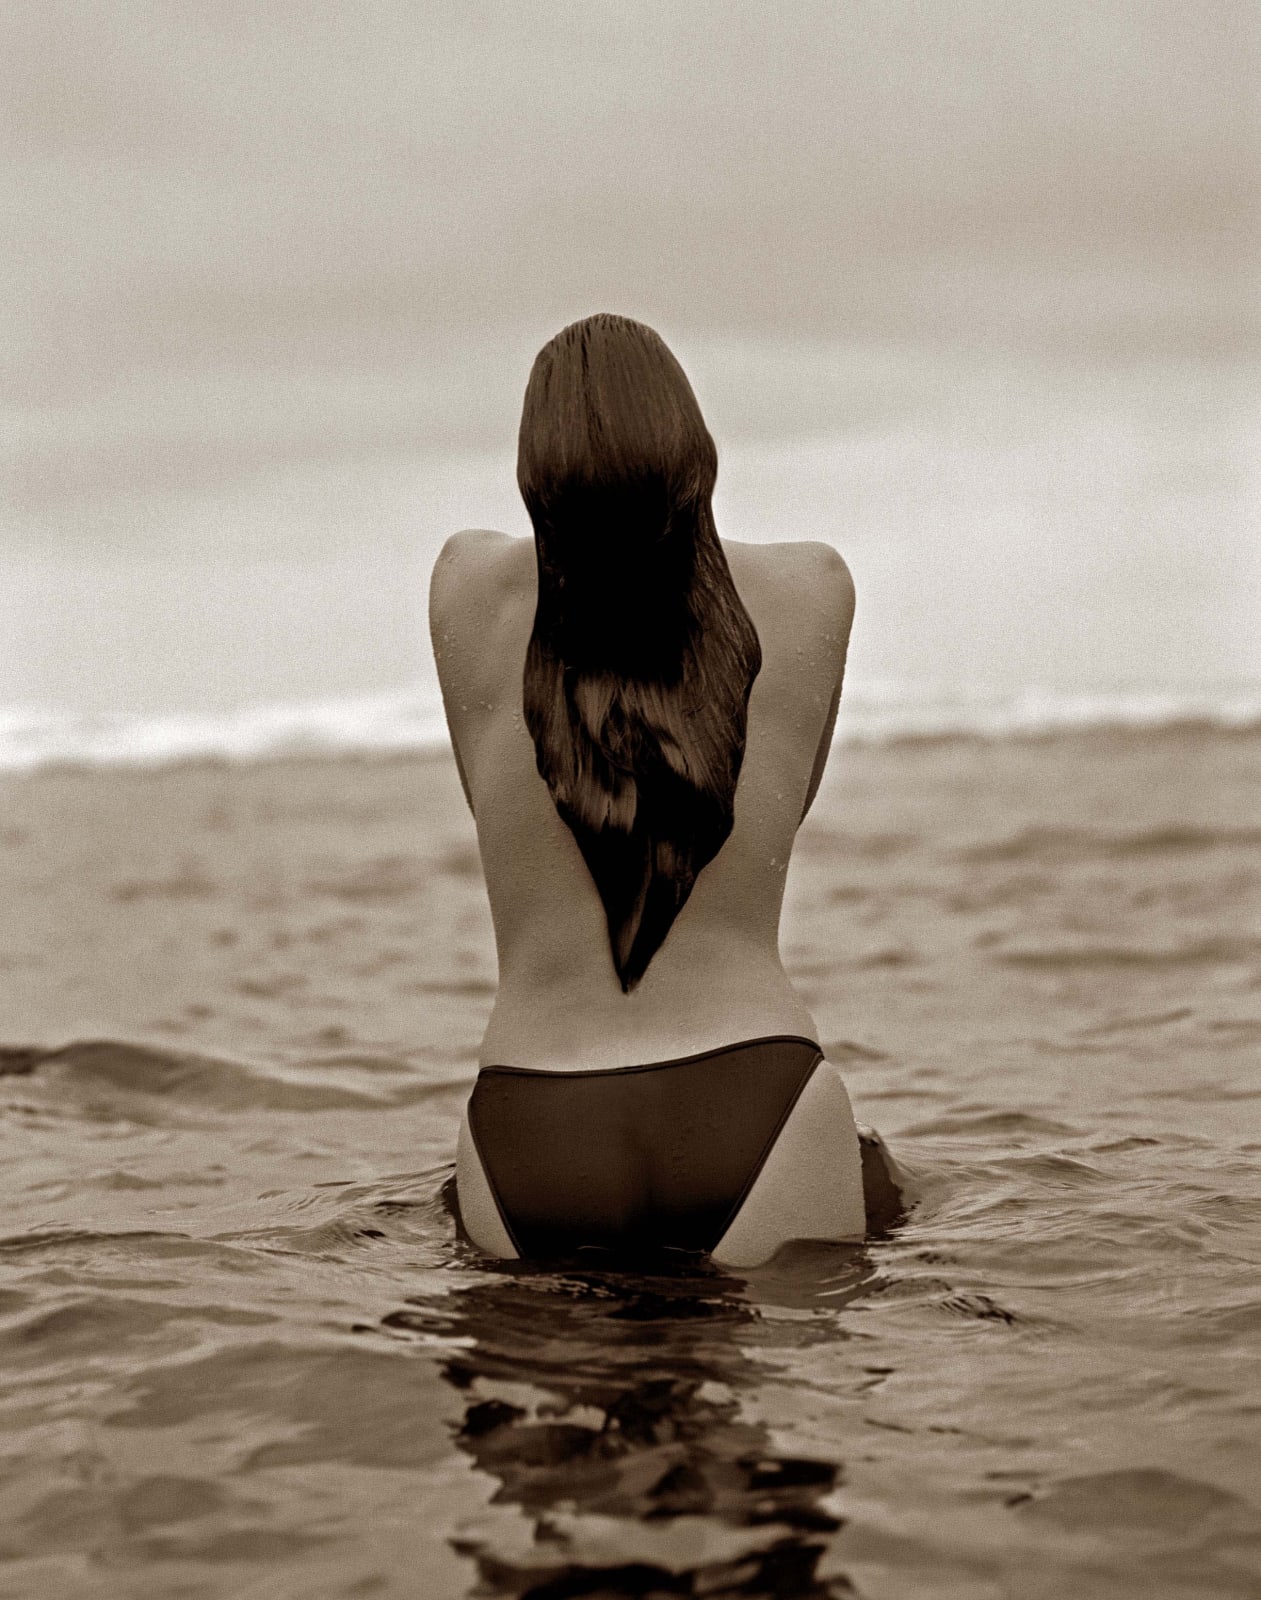 Herb Ritts photograph of woman wearing bikini bottoms in ocean